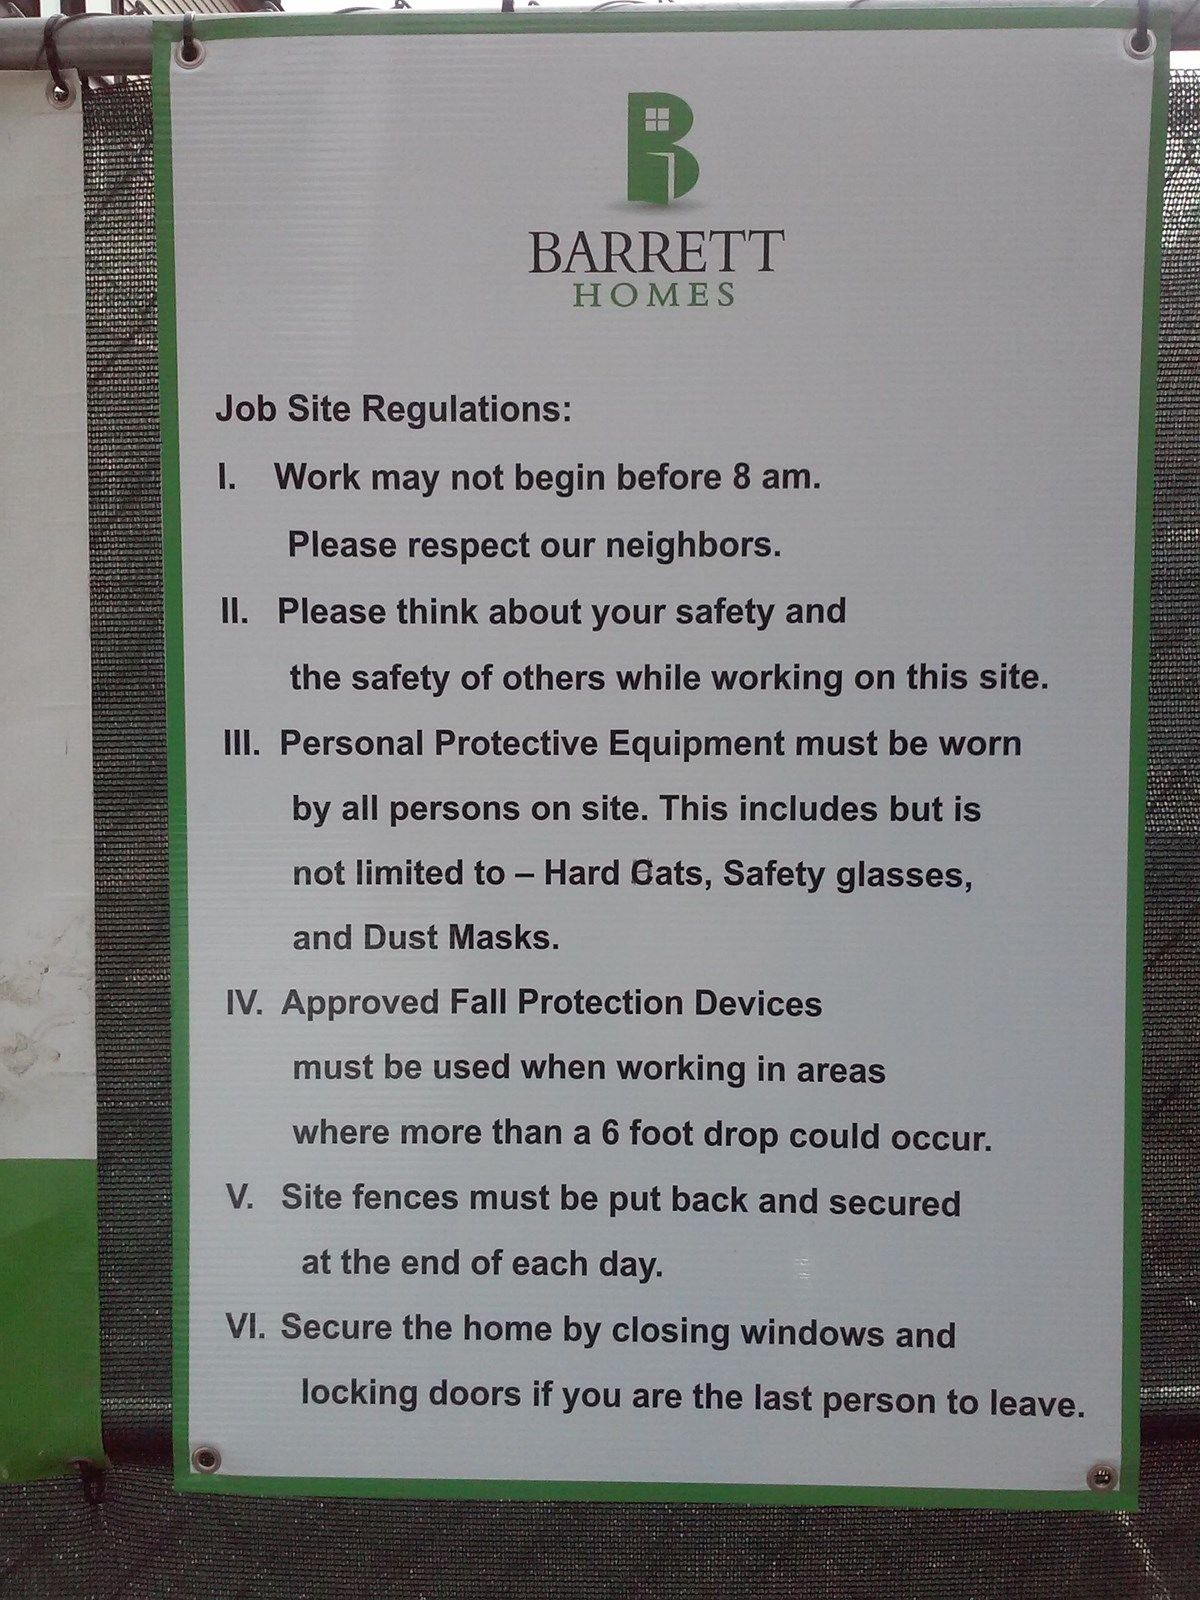 regulatory job site sign